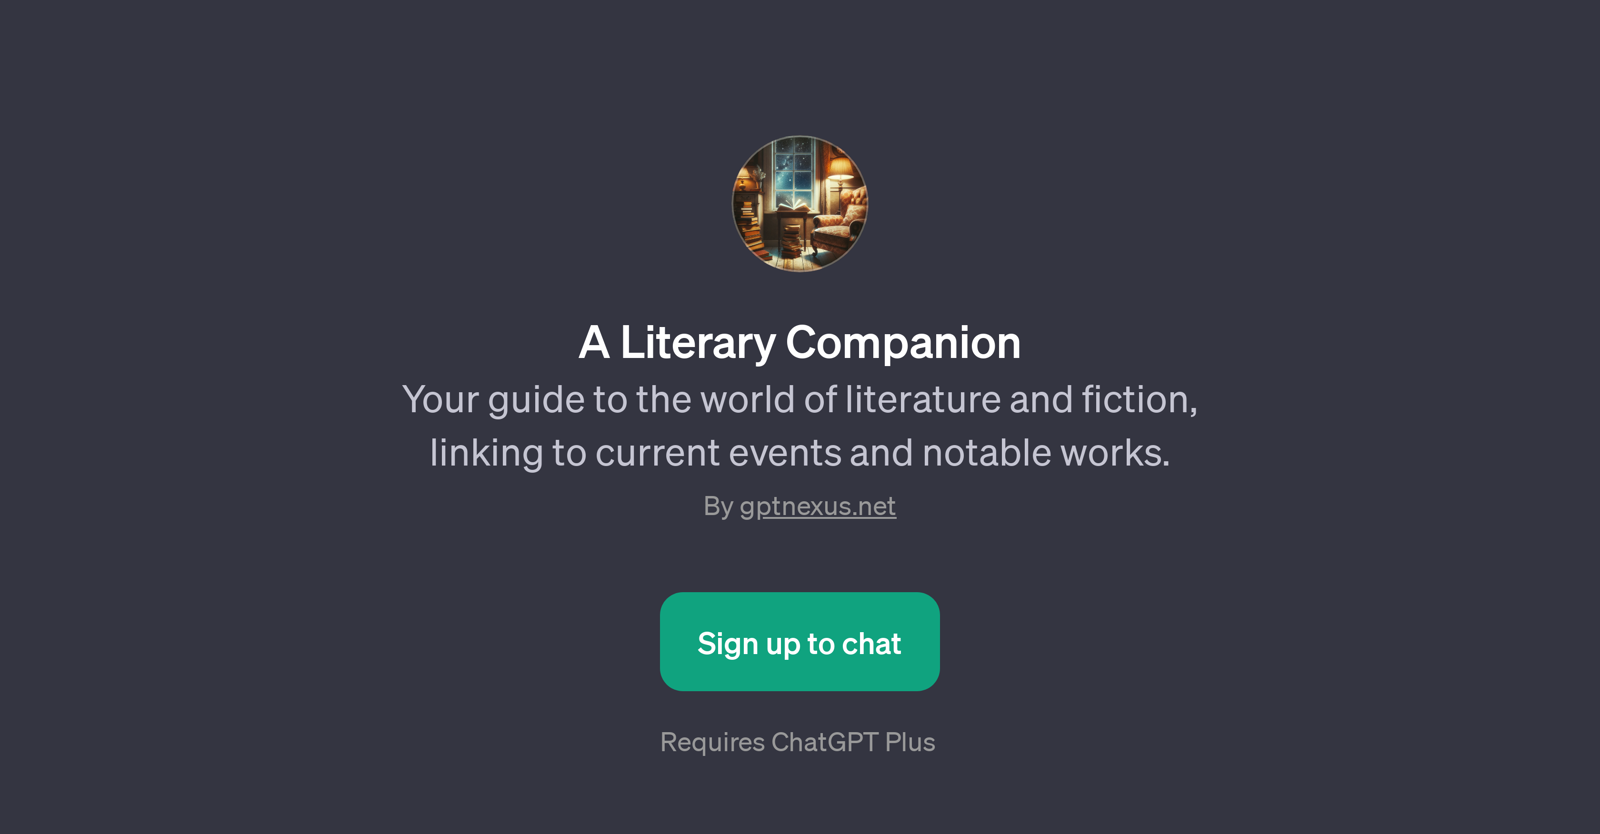 A Literary Companion website